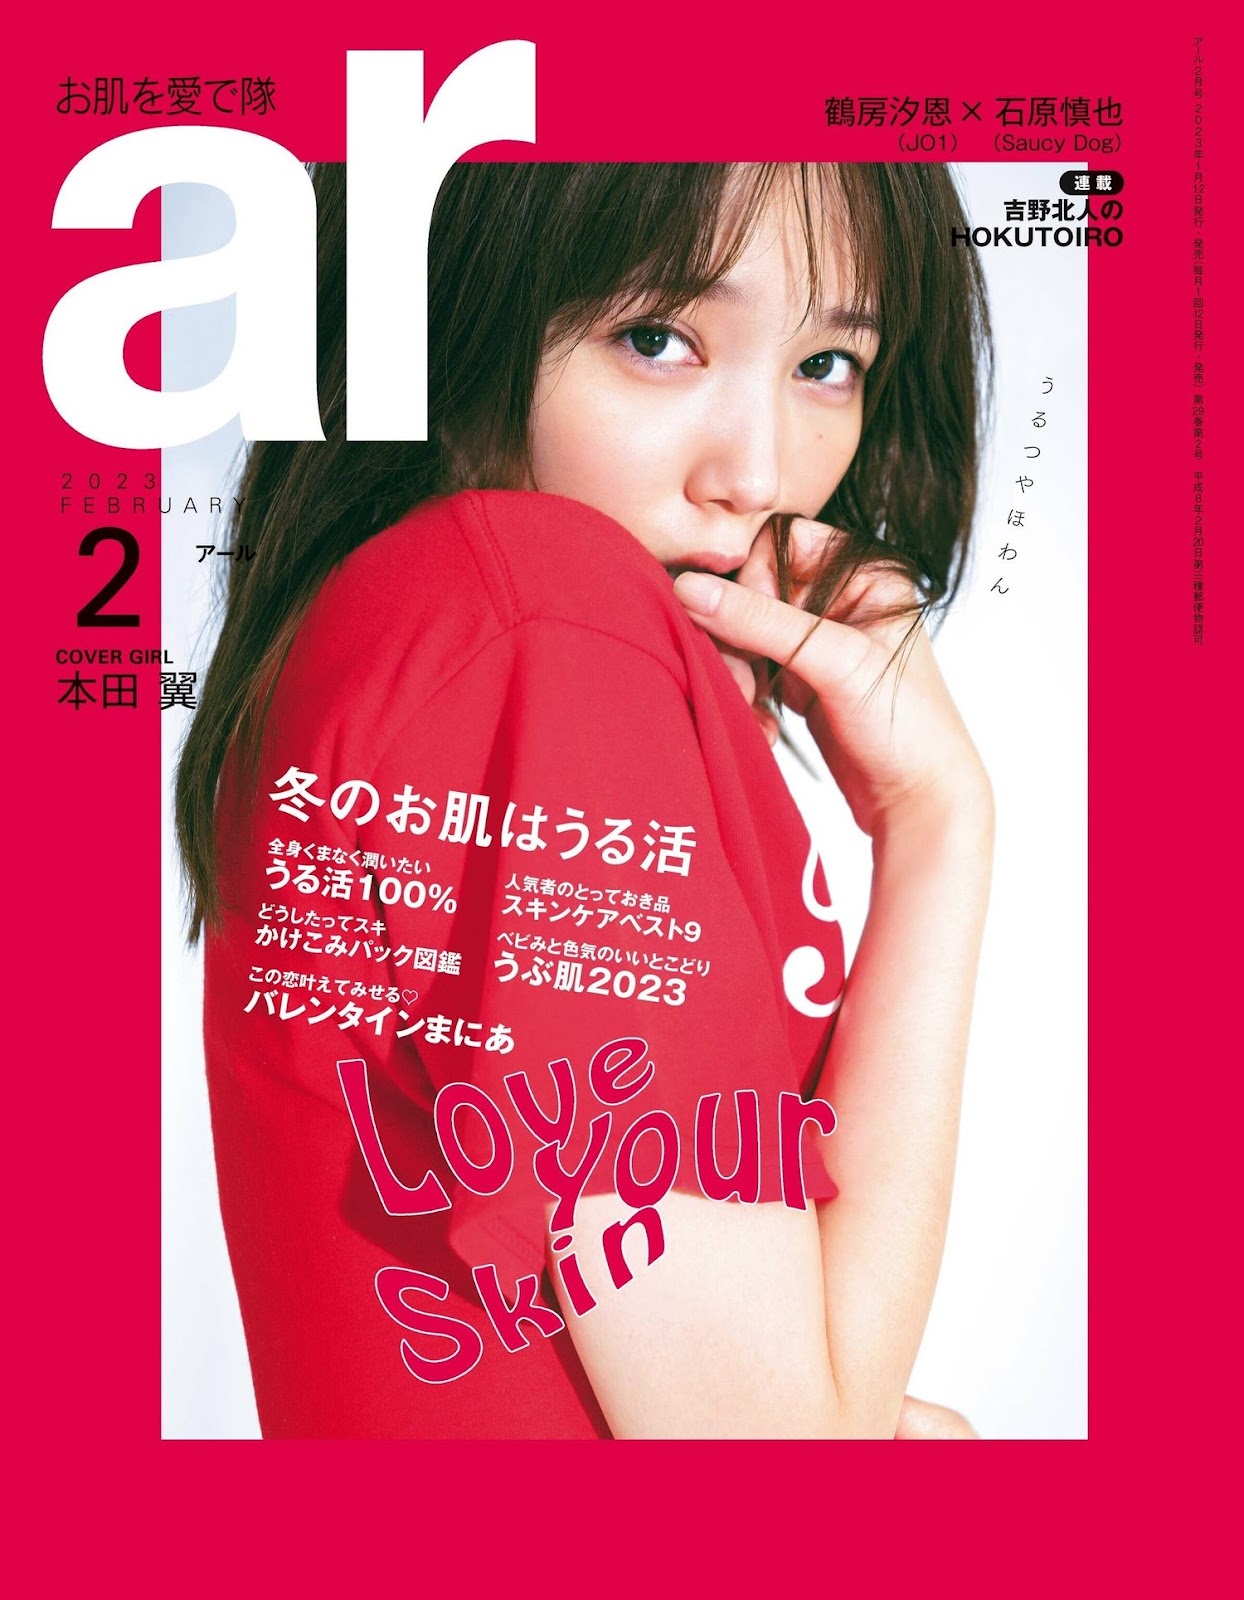 Honda Tsubasa 本田翼, aR (アール) Magazine 2023.02 img 2